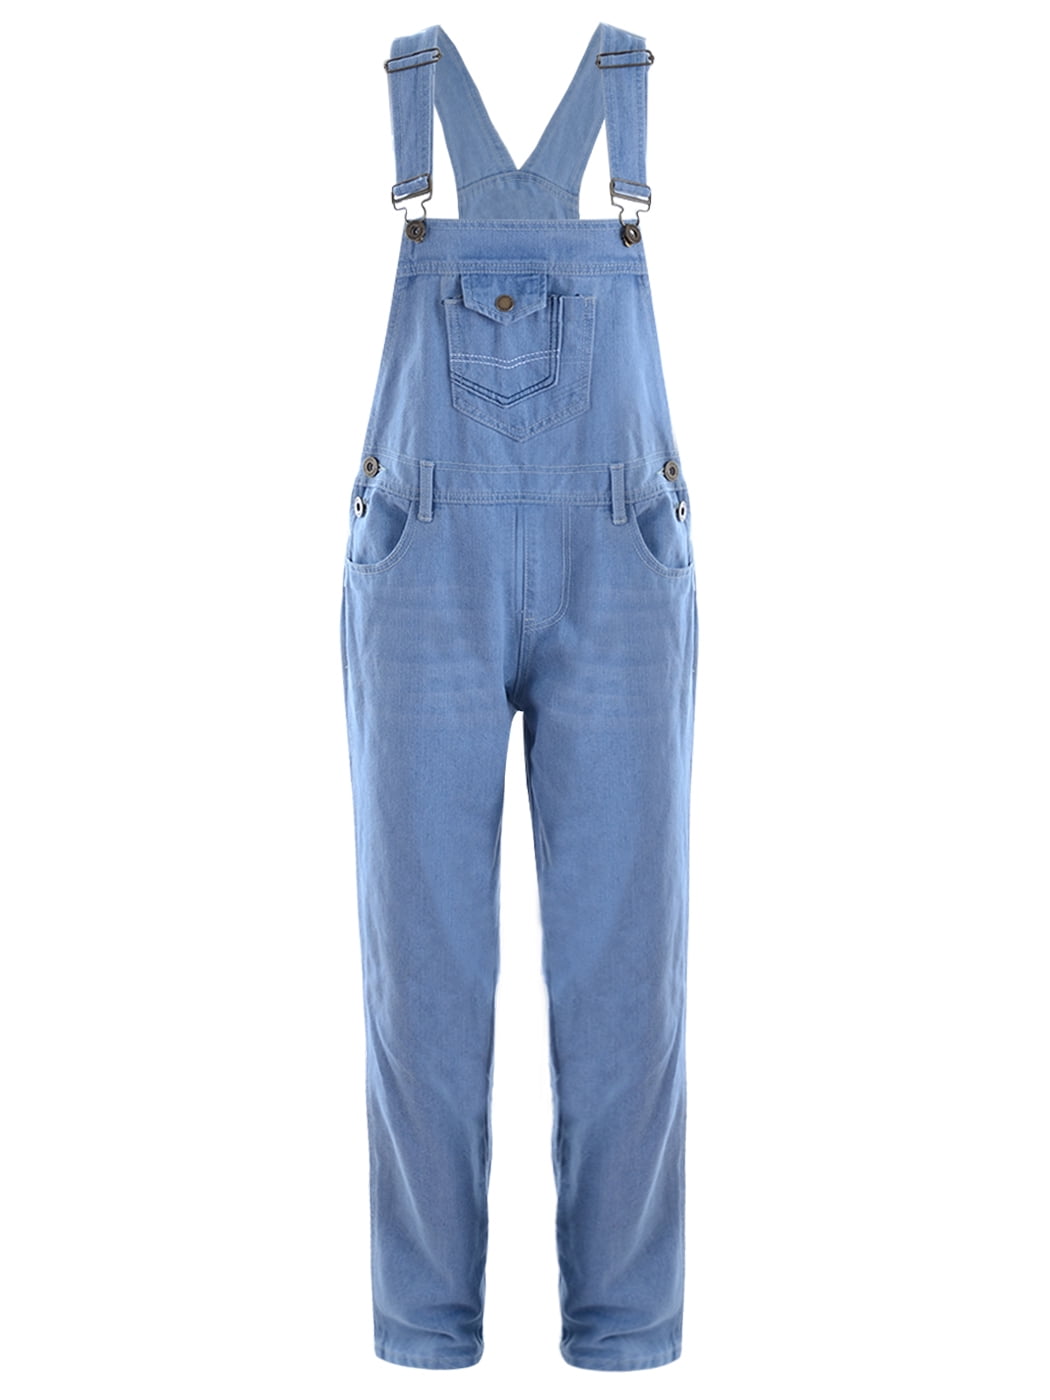 light blue jean overalls